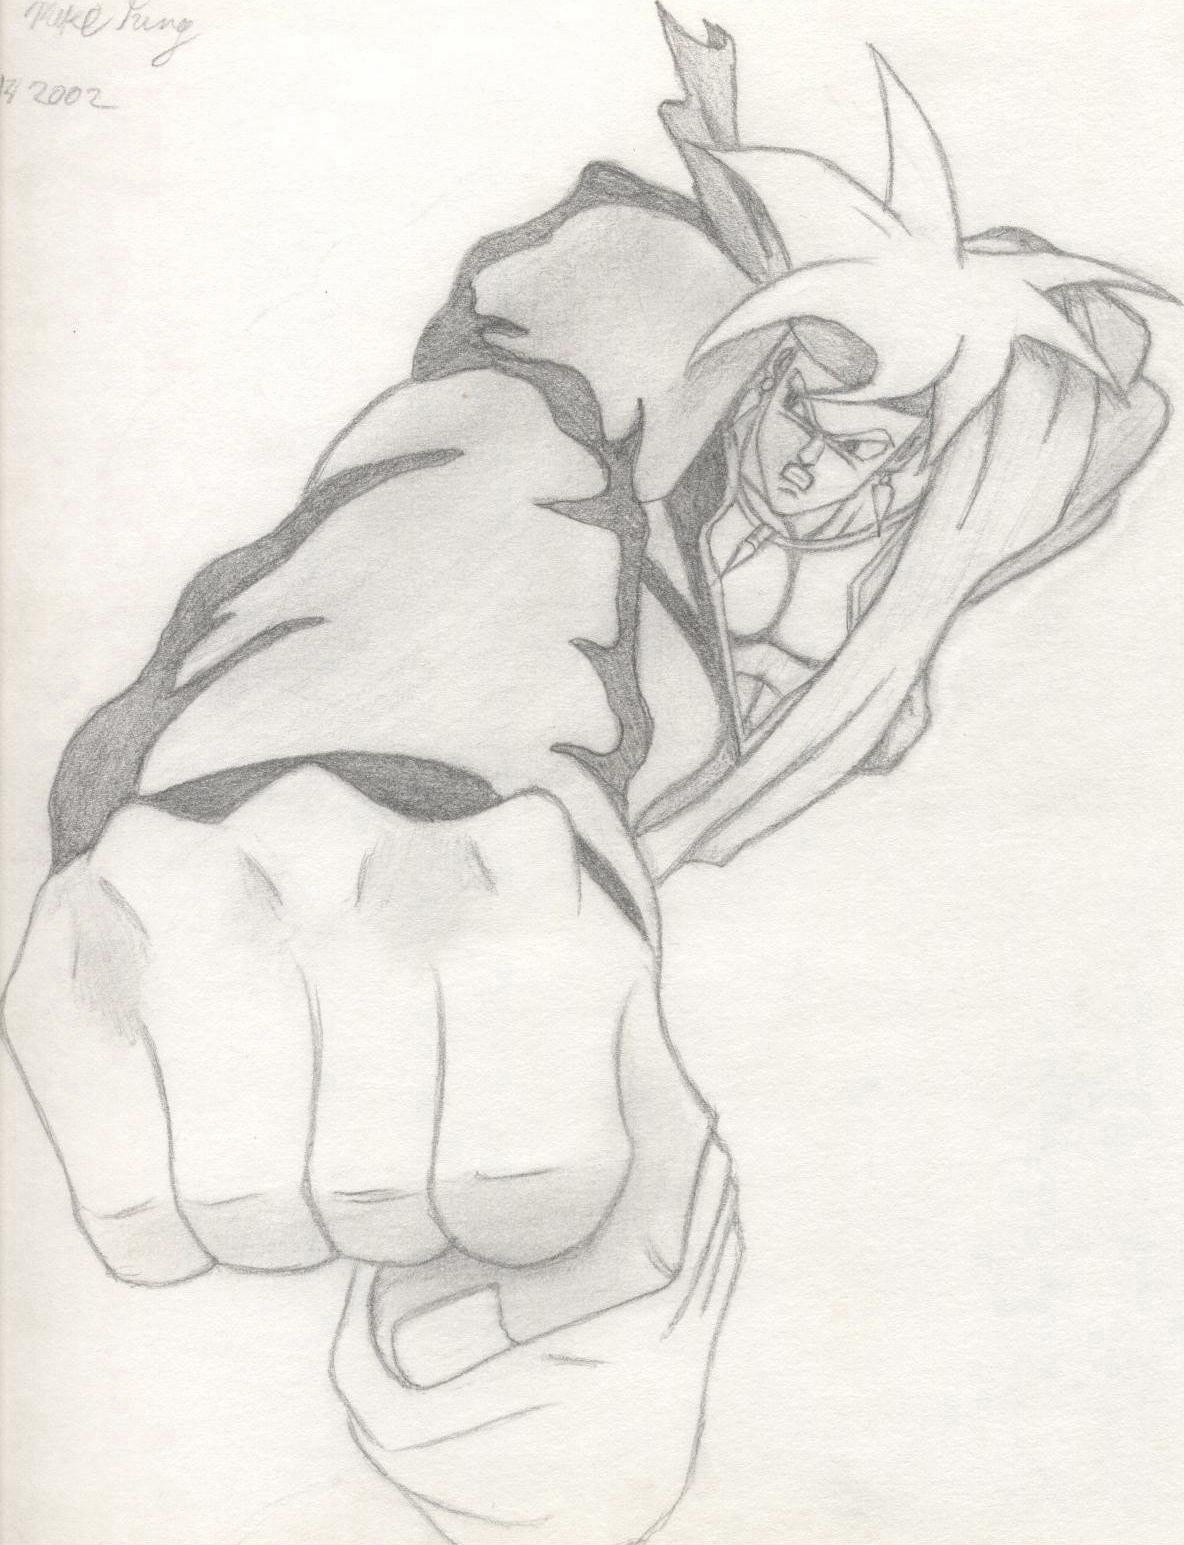 Gokua's punch by Ran_The_Hyena